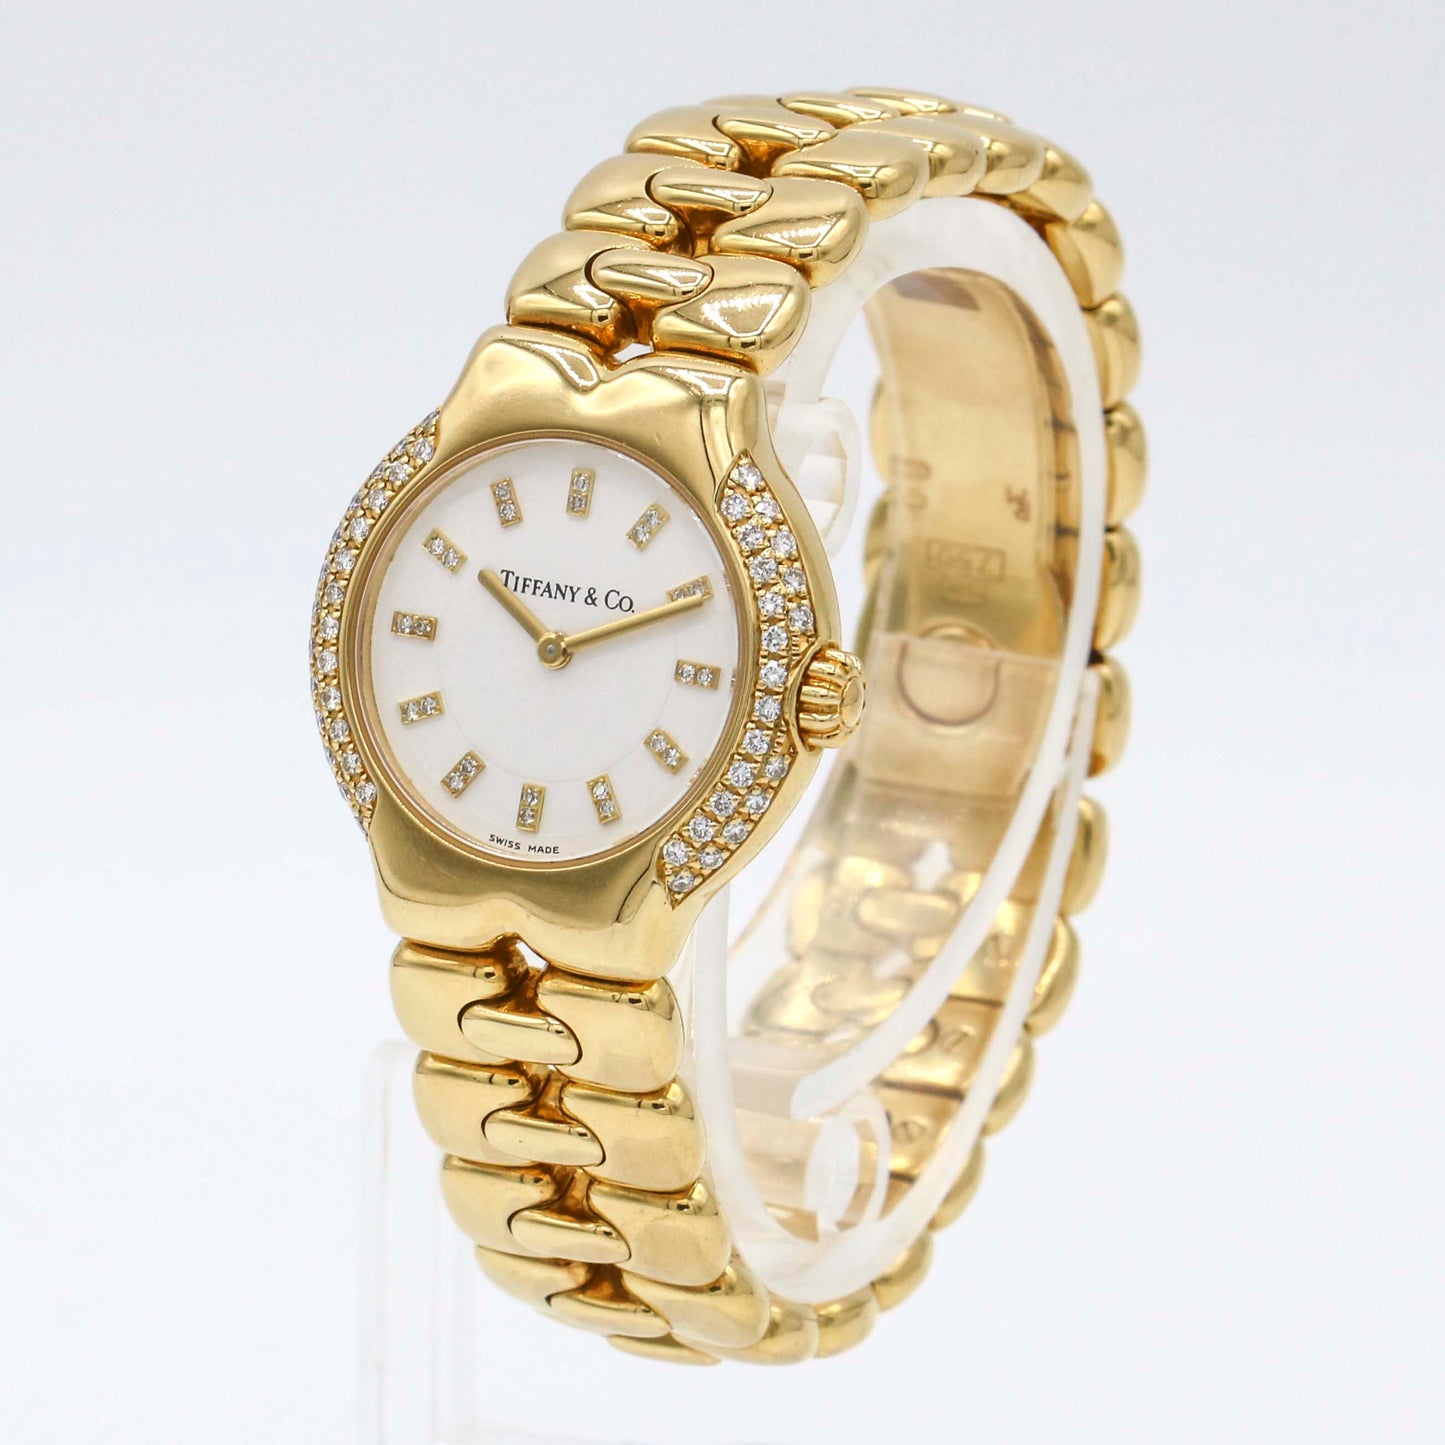 Tiffany & Co. Ladies 18k Gold Tesoro Watch with Diamond Bezel and Dial